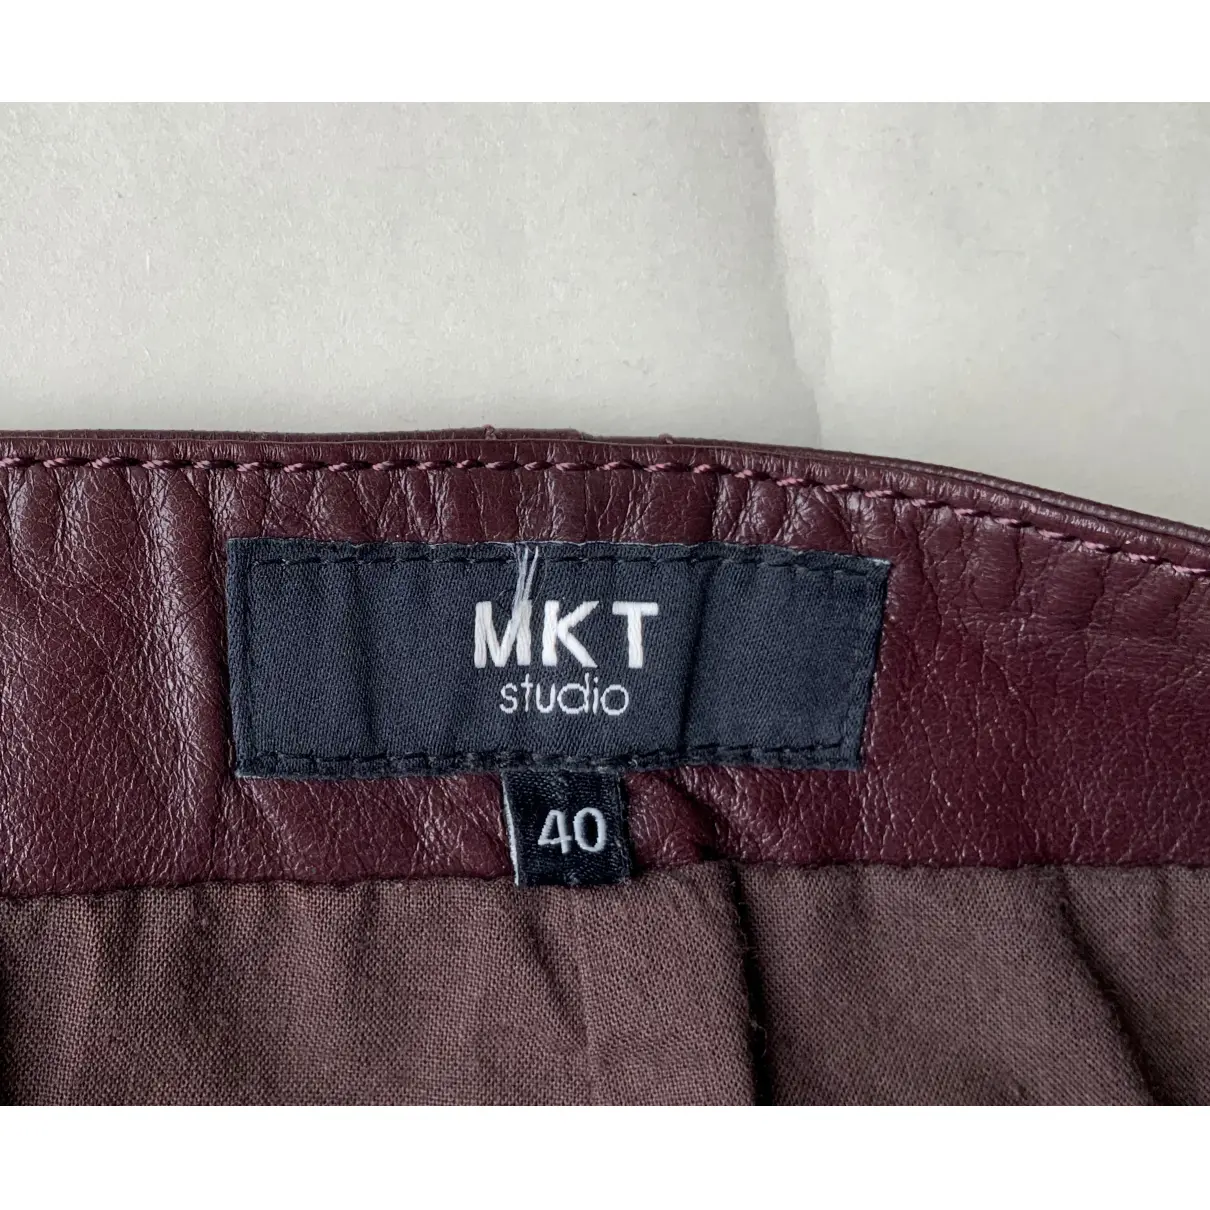 Leather mini skirt Mkt Studio